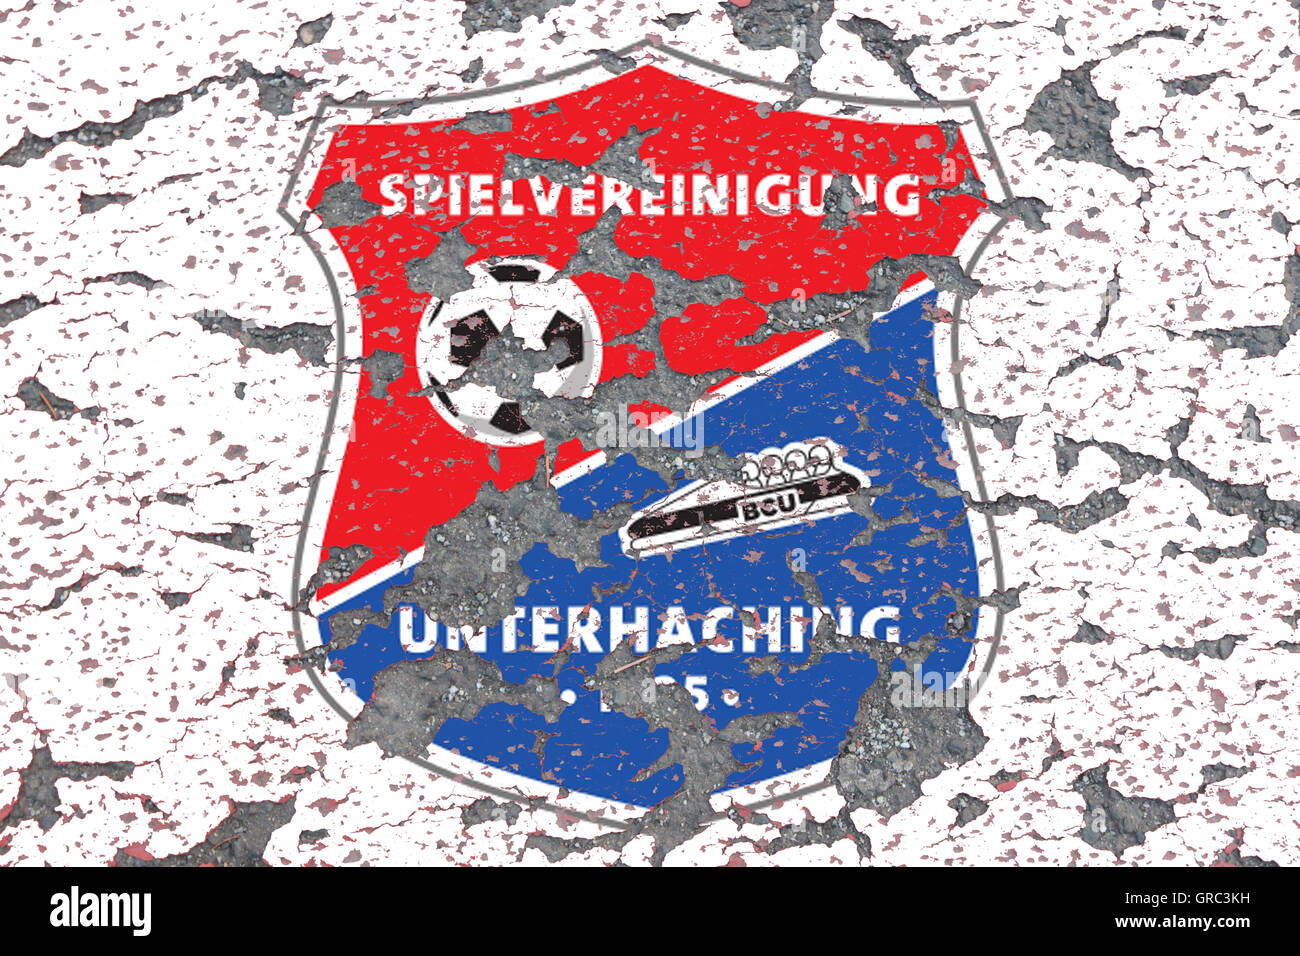 Eroding Logos Of Soccer Club Spvgg Unterhaching Stock Photo